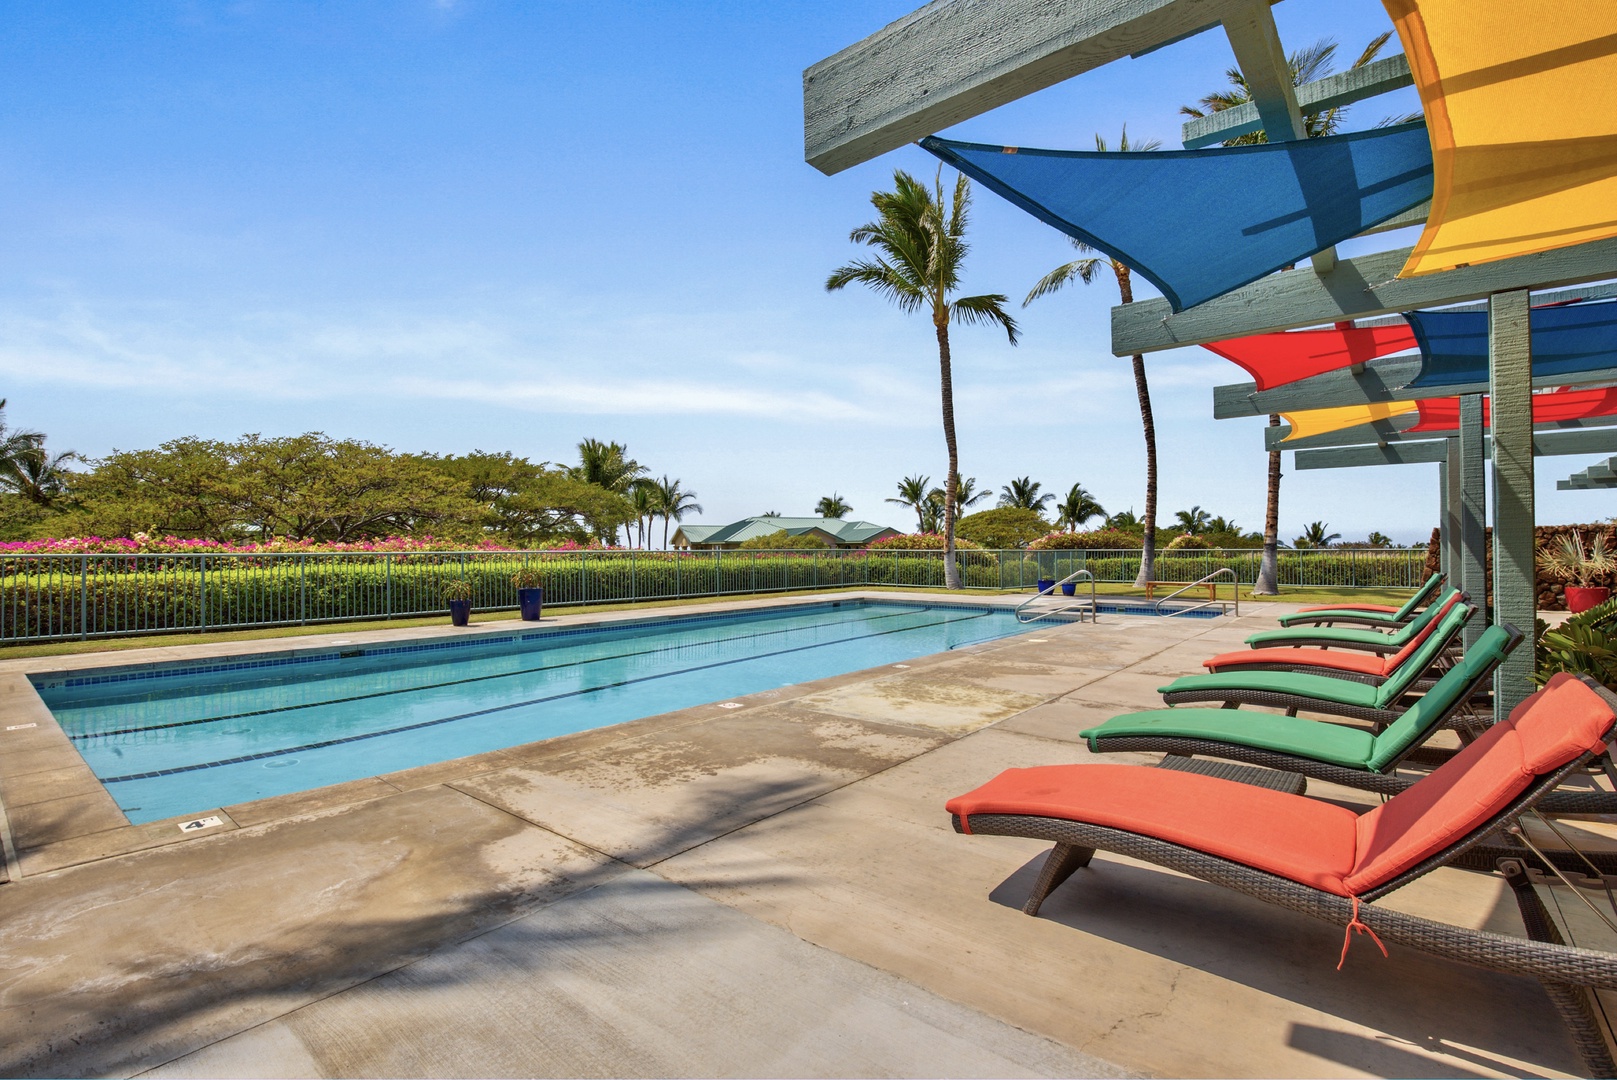 Kamuela Vacation Rentals, 2BD Kumulani (I-4) at Mauna Kea Resort - Alternate view of amenities center pool with colorful loungers and shade sails.